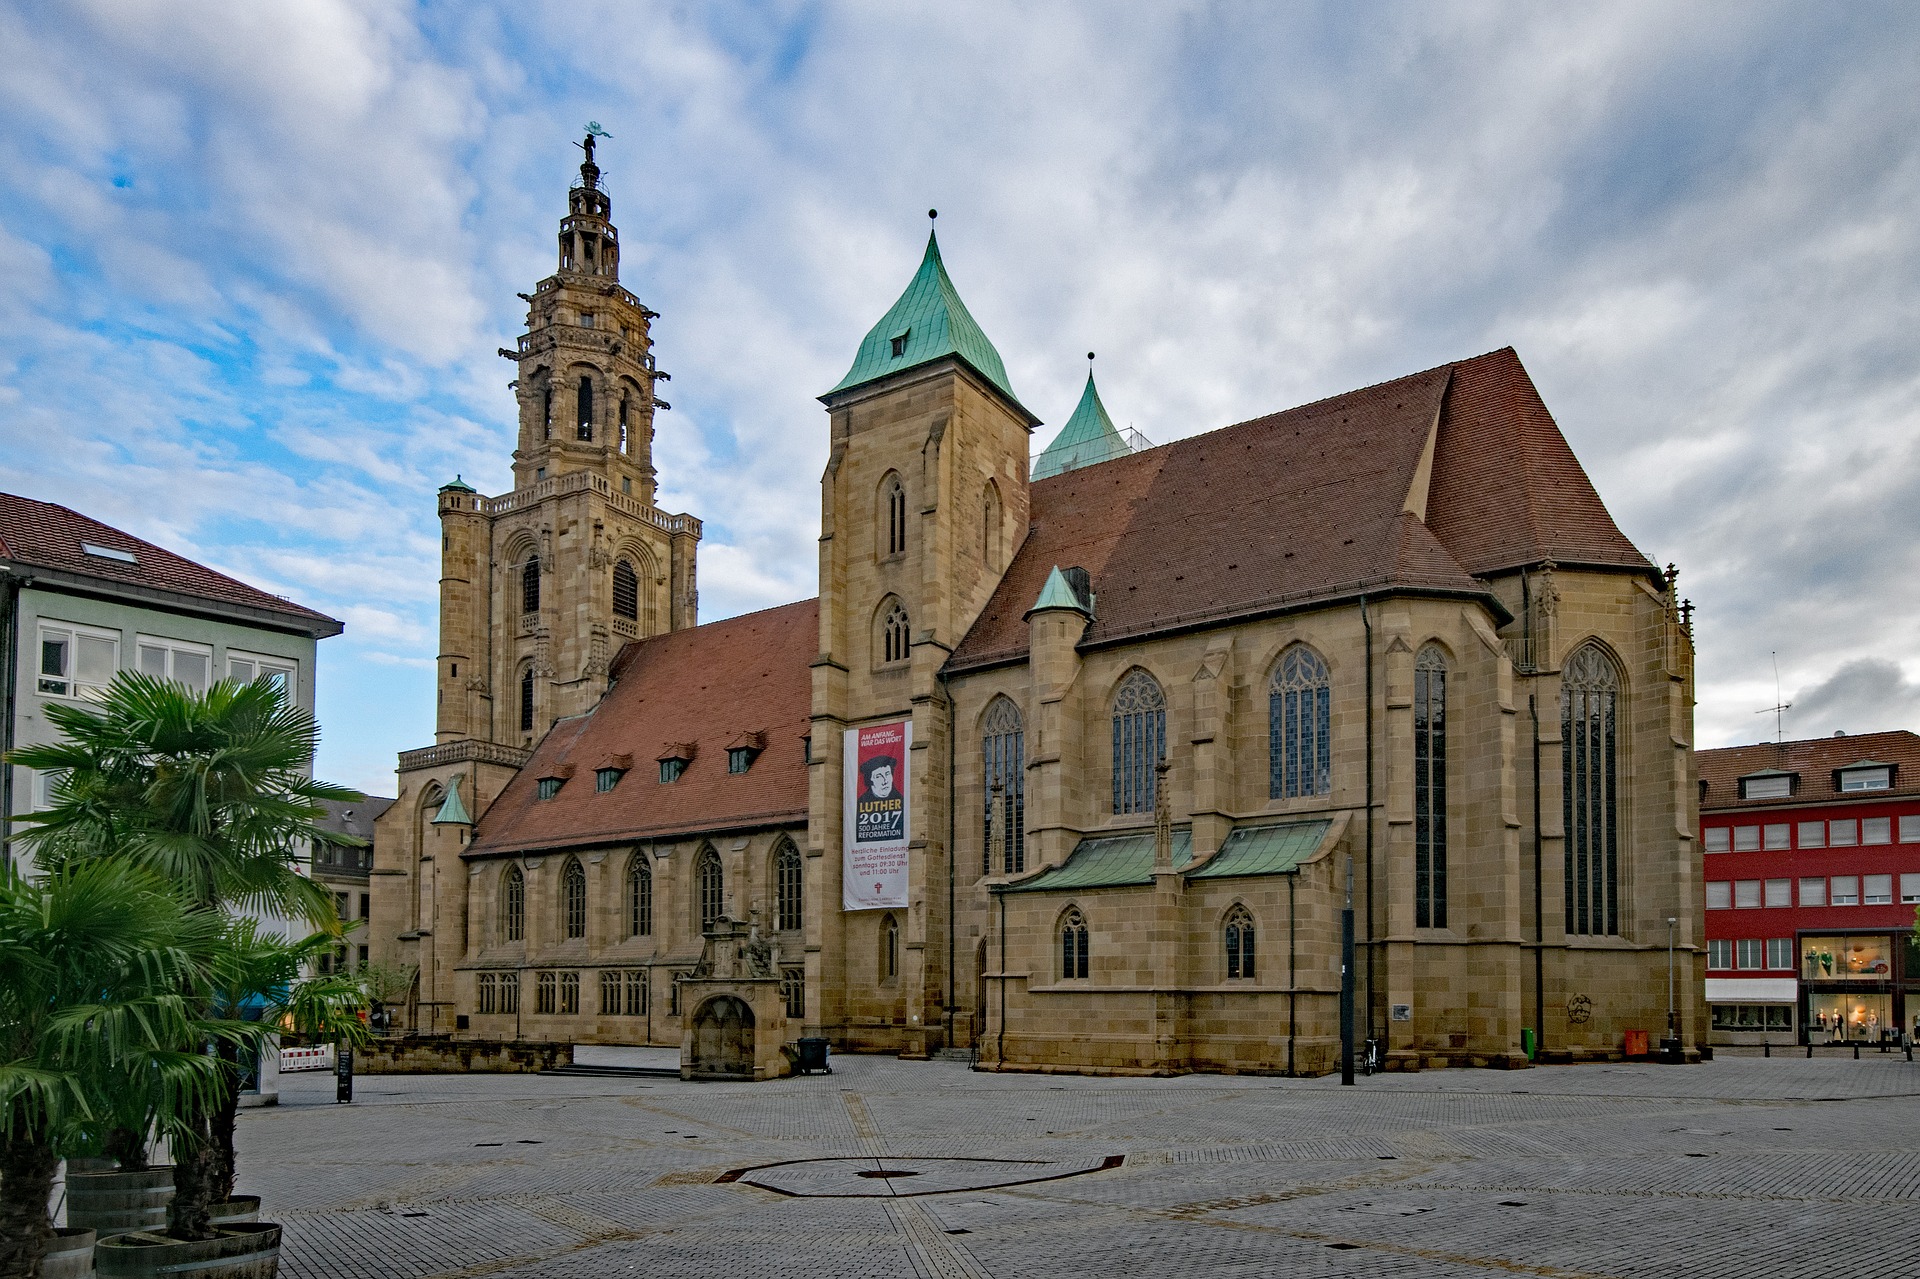 Stadt Heilbronn